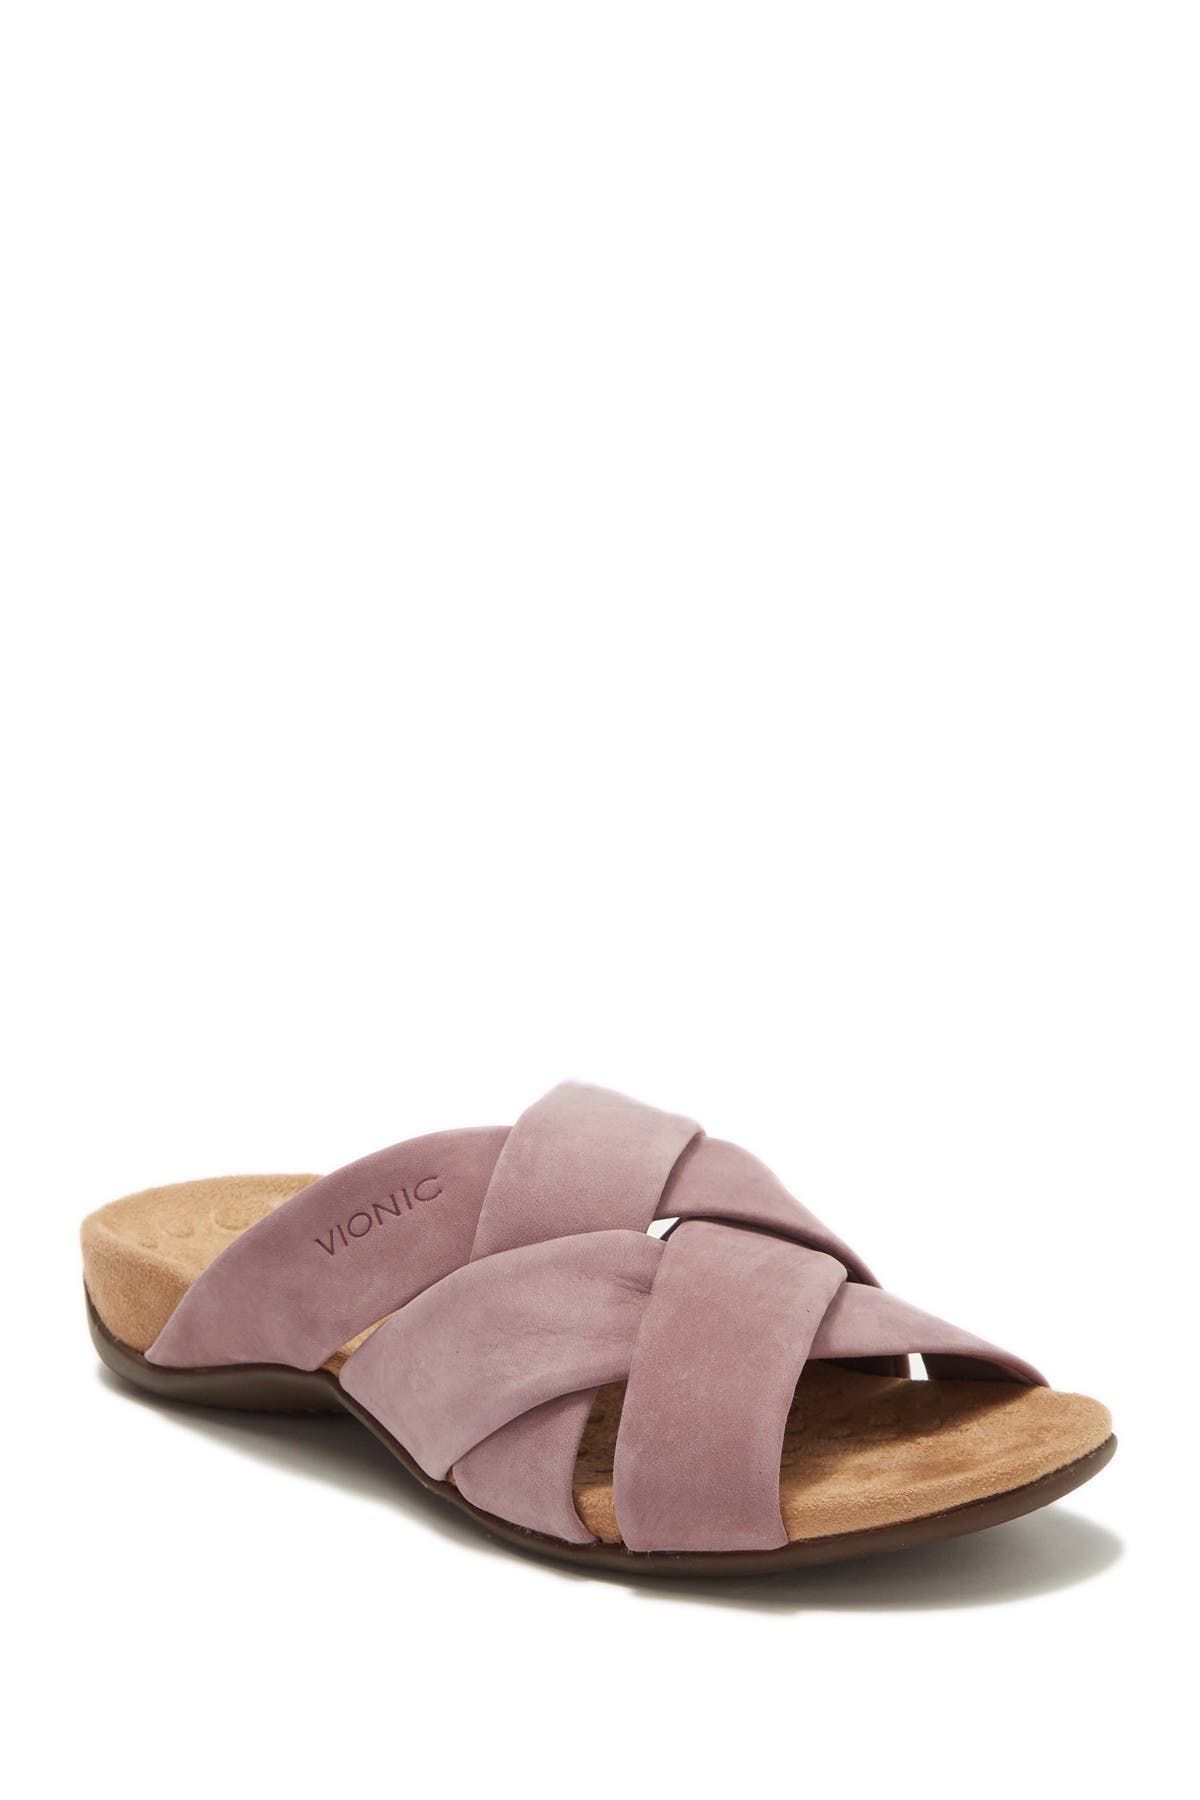 vionic juno slide sandal